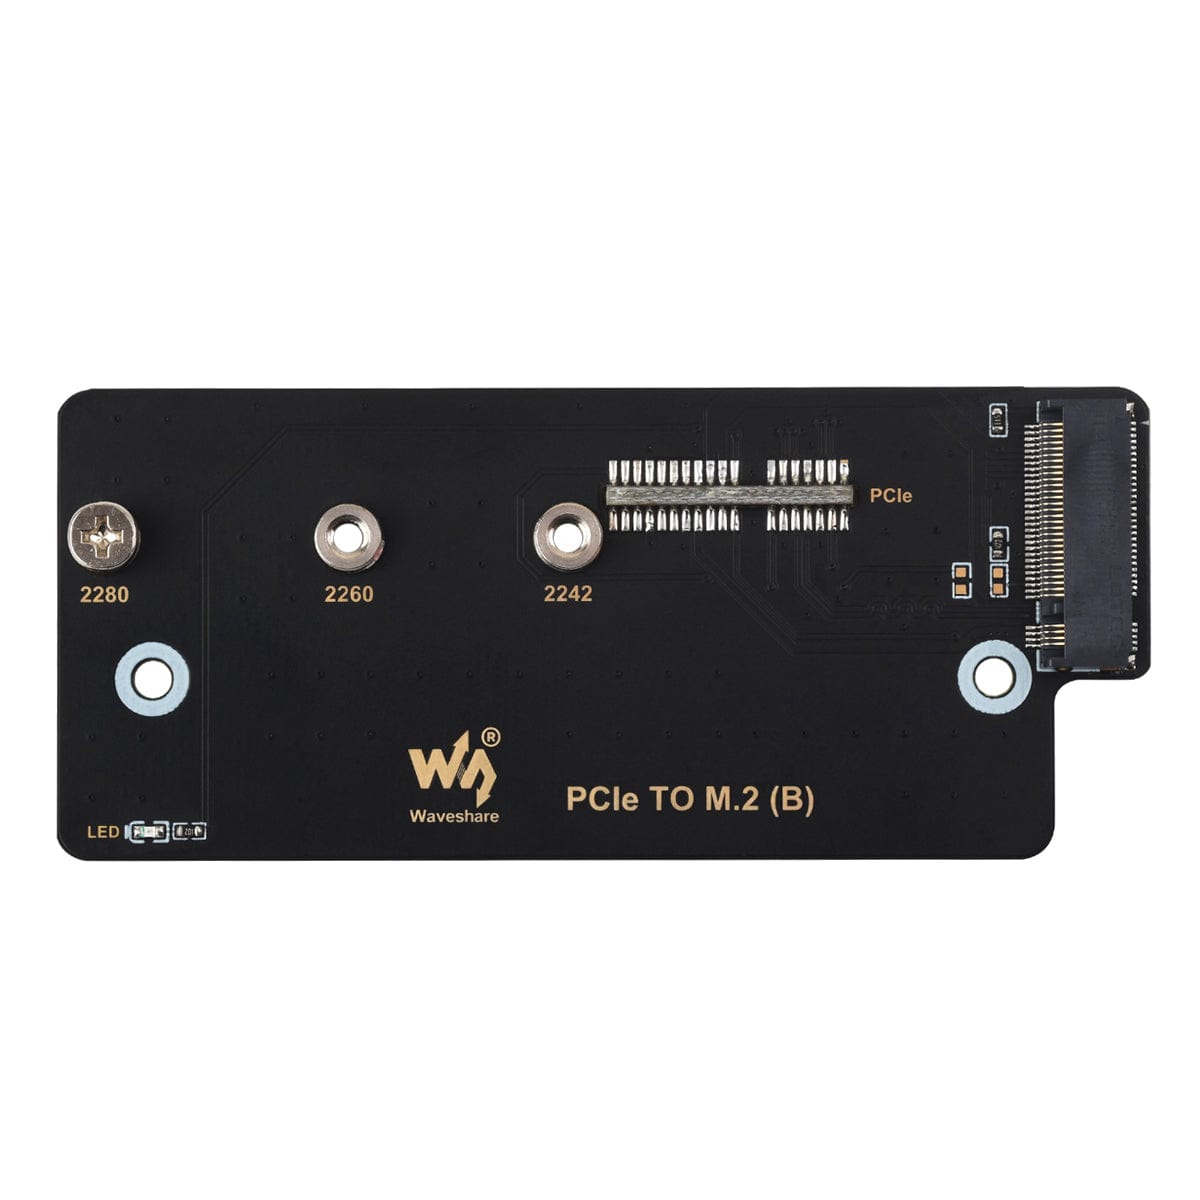 PCIe to M.2 adapter (B) for Raspberry Pi CM4 IO Board - The Pi Hut